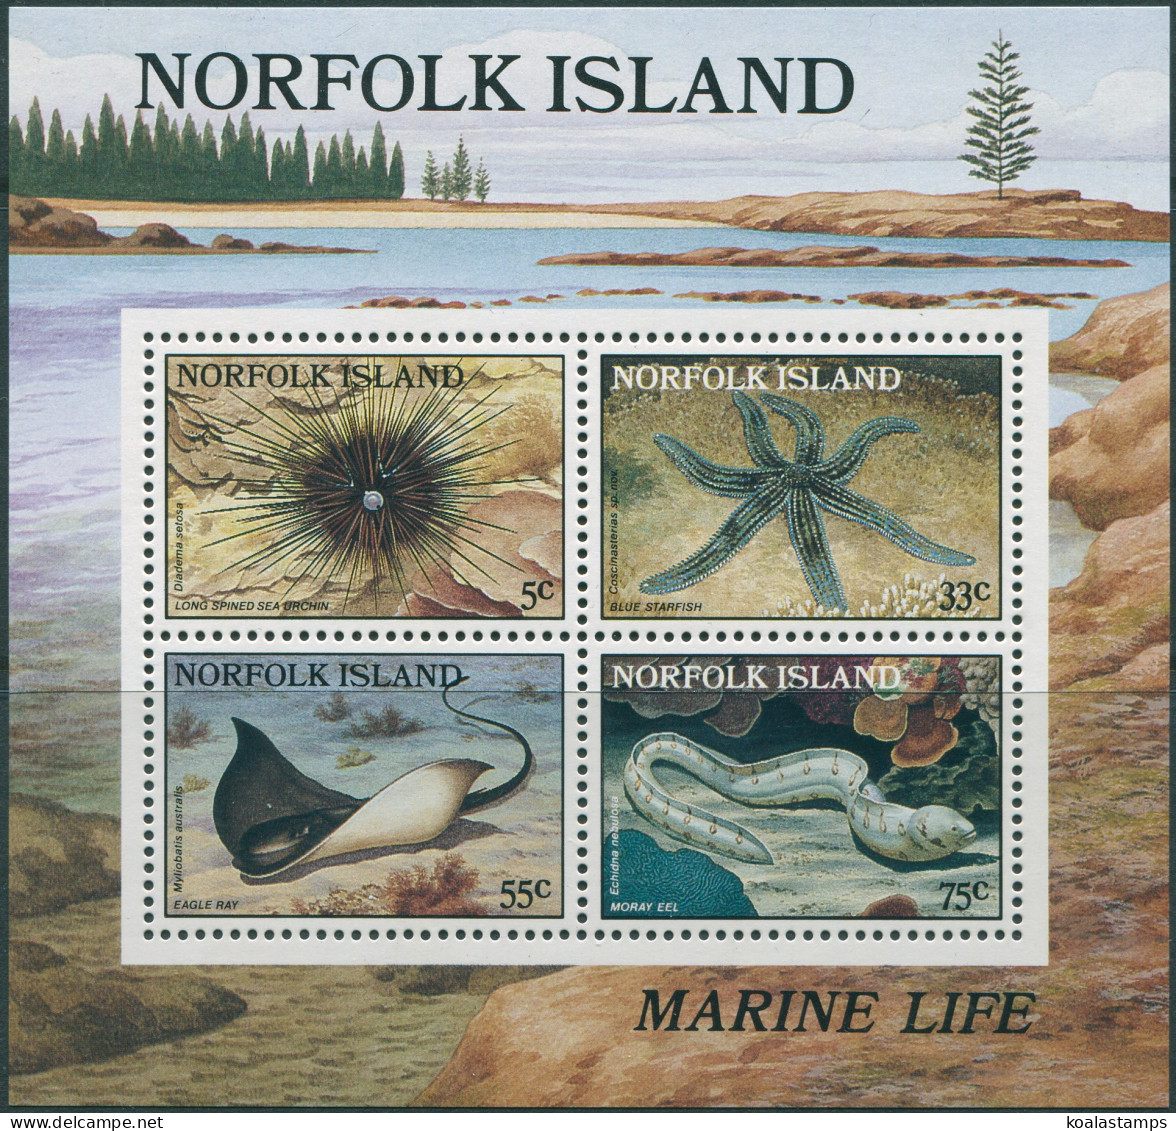 Norfolk Island 1986 SG382 Reef MS MNH - Isla Norfolk